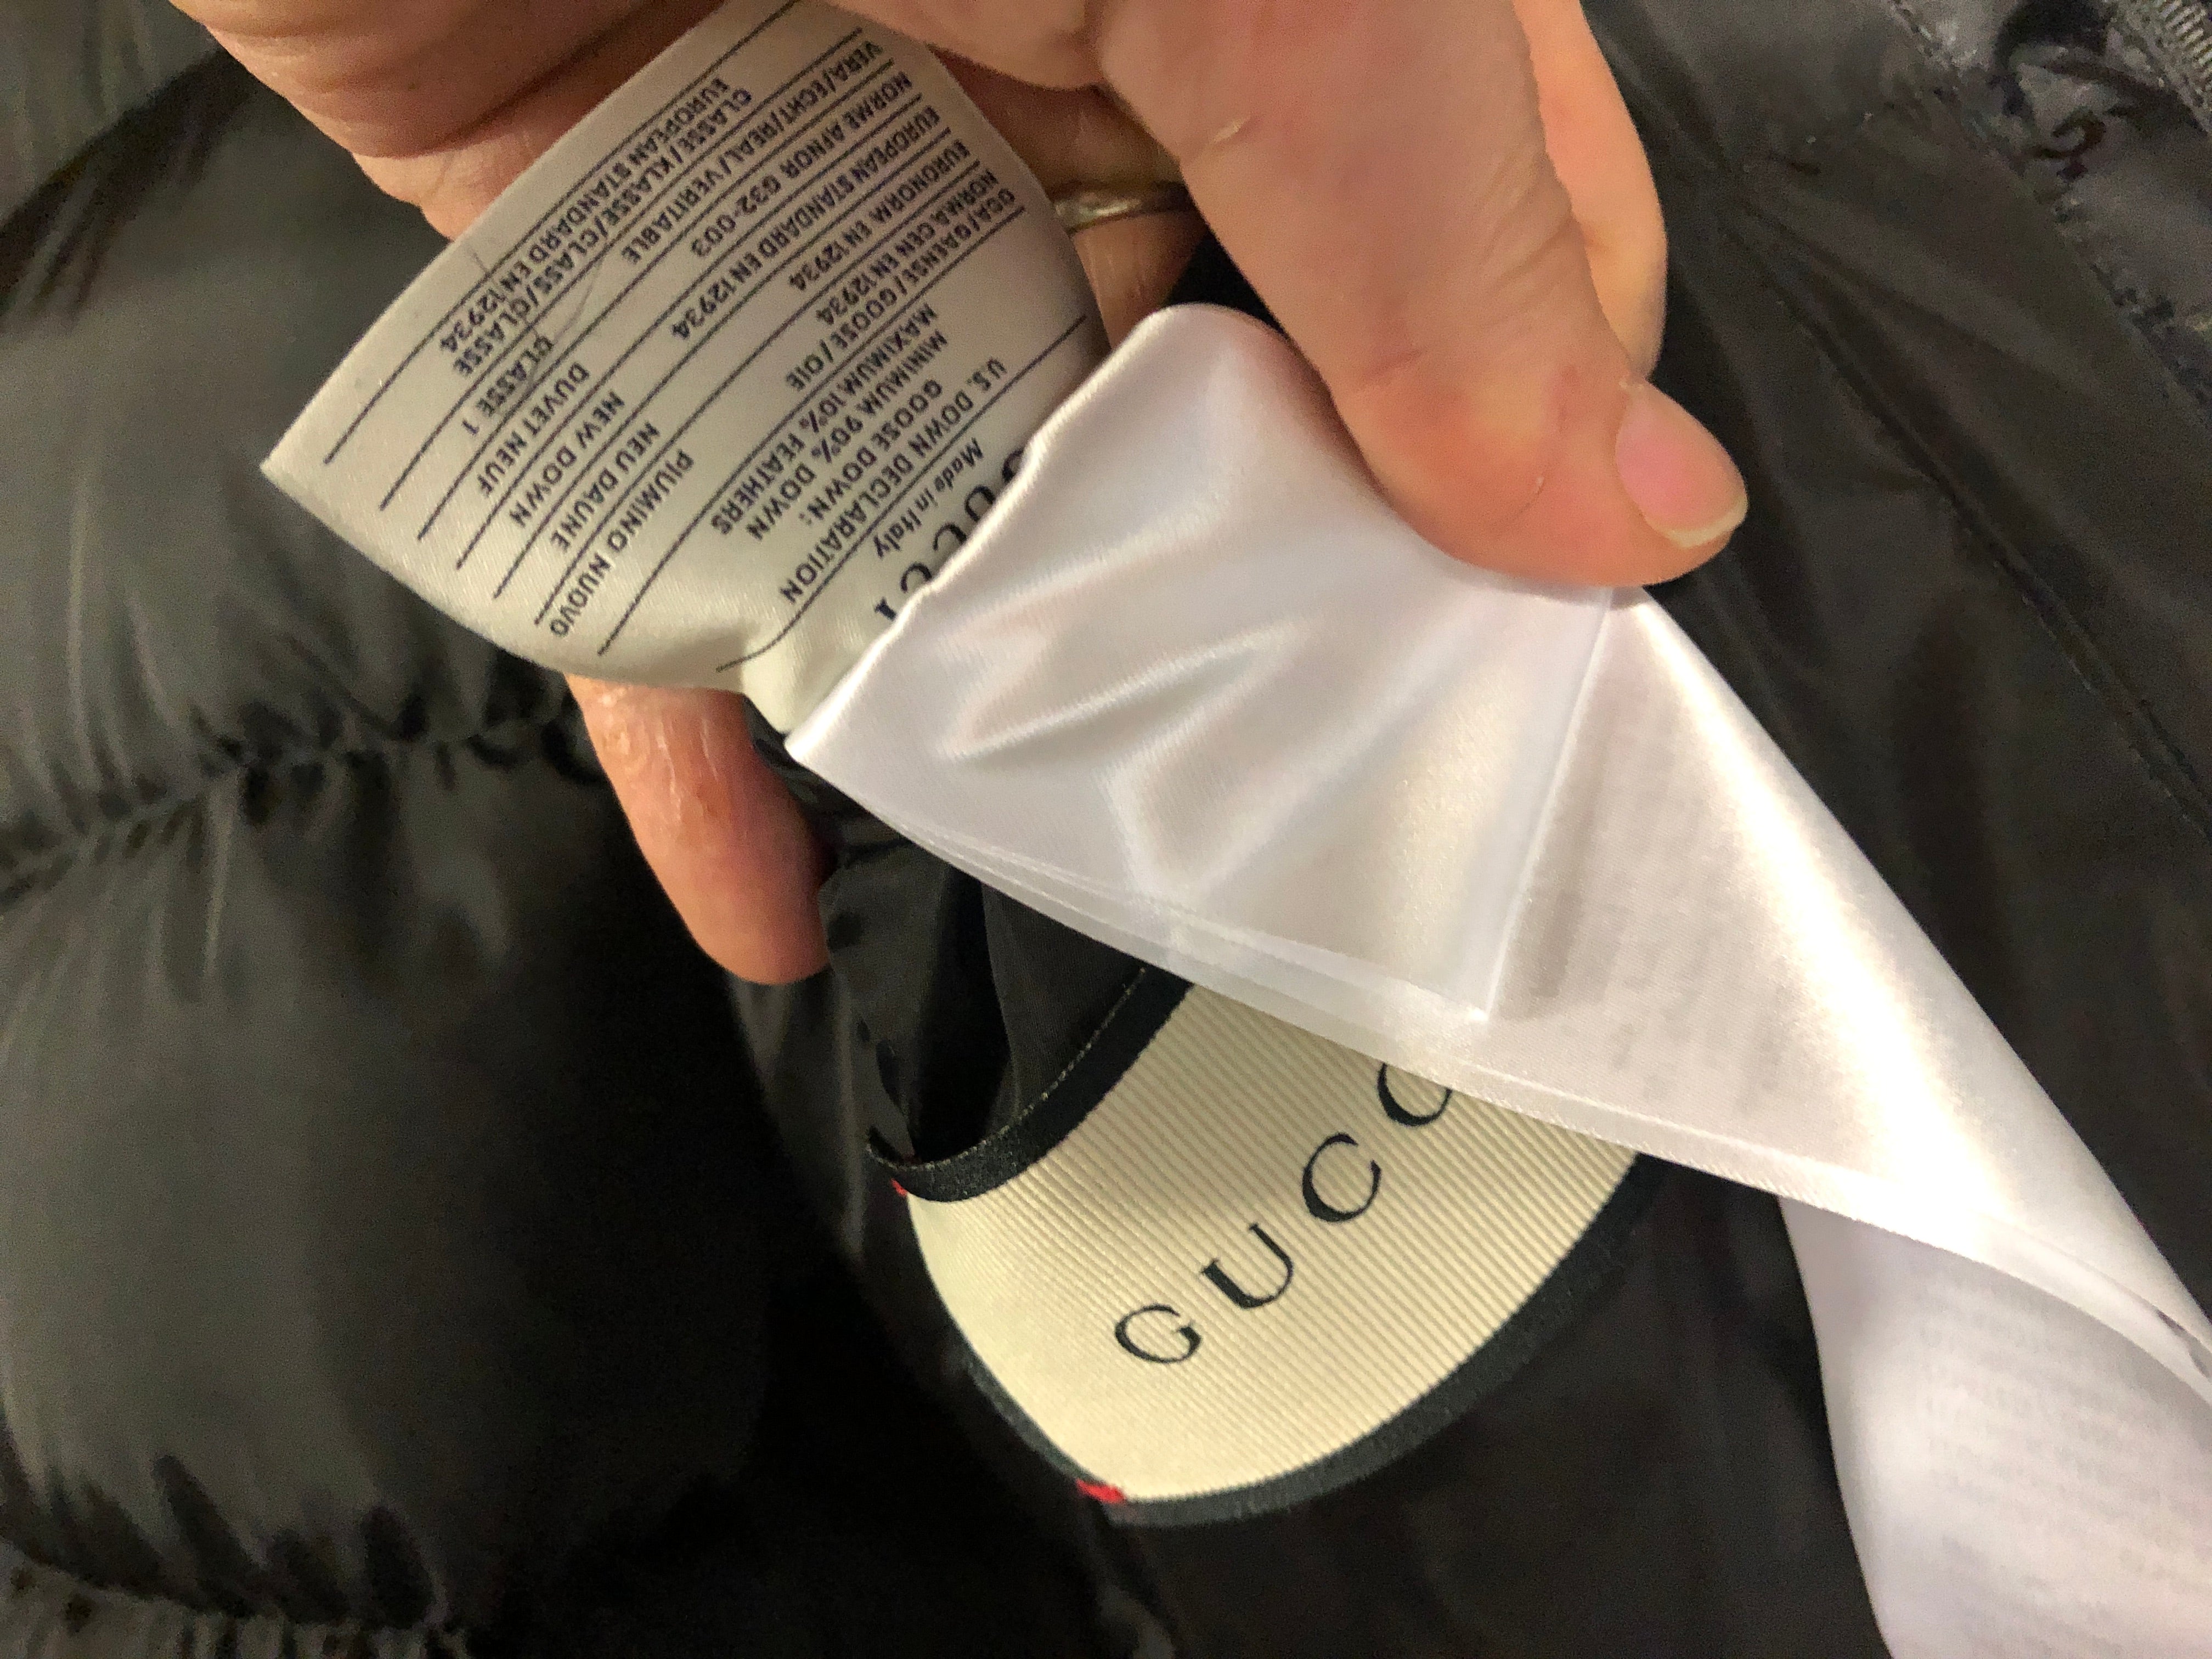 GUCCI GG jacquard nylon jacket